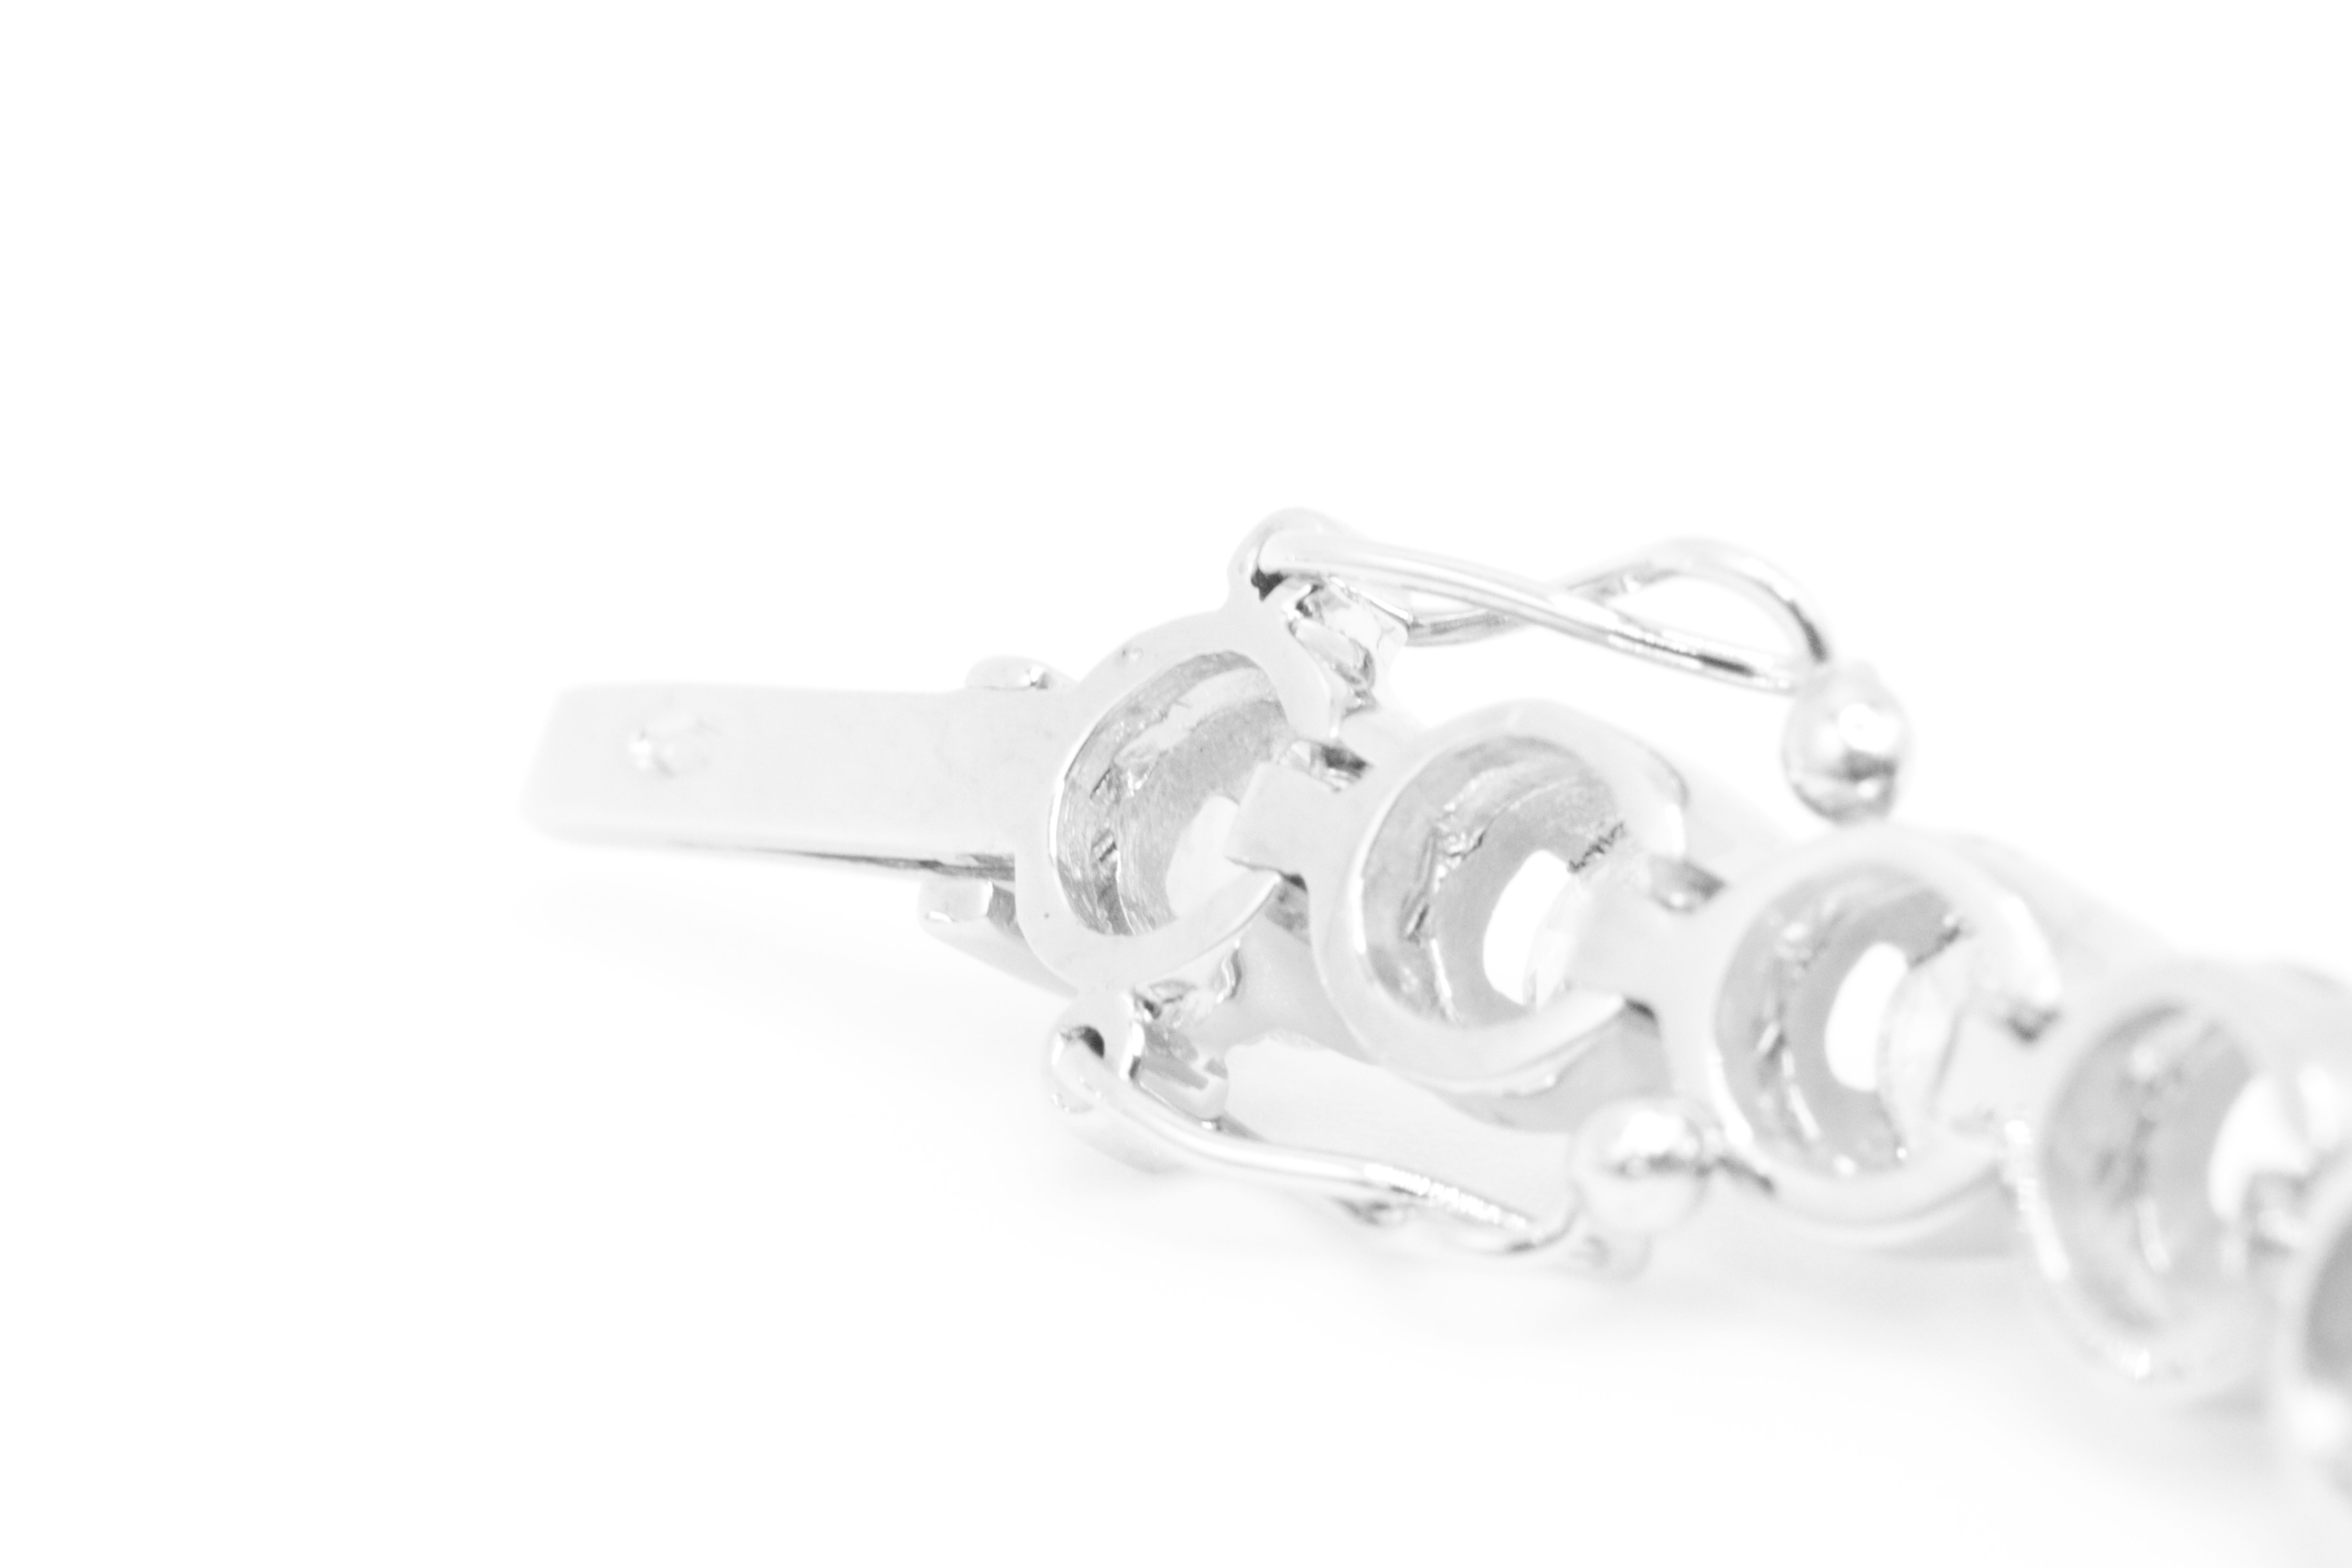 7.0 Carat 18ct White Gold Tennis Bracelet set with Round Brilliant Cut Natural Diamonds - Image 6 of 16